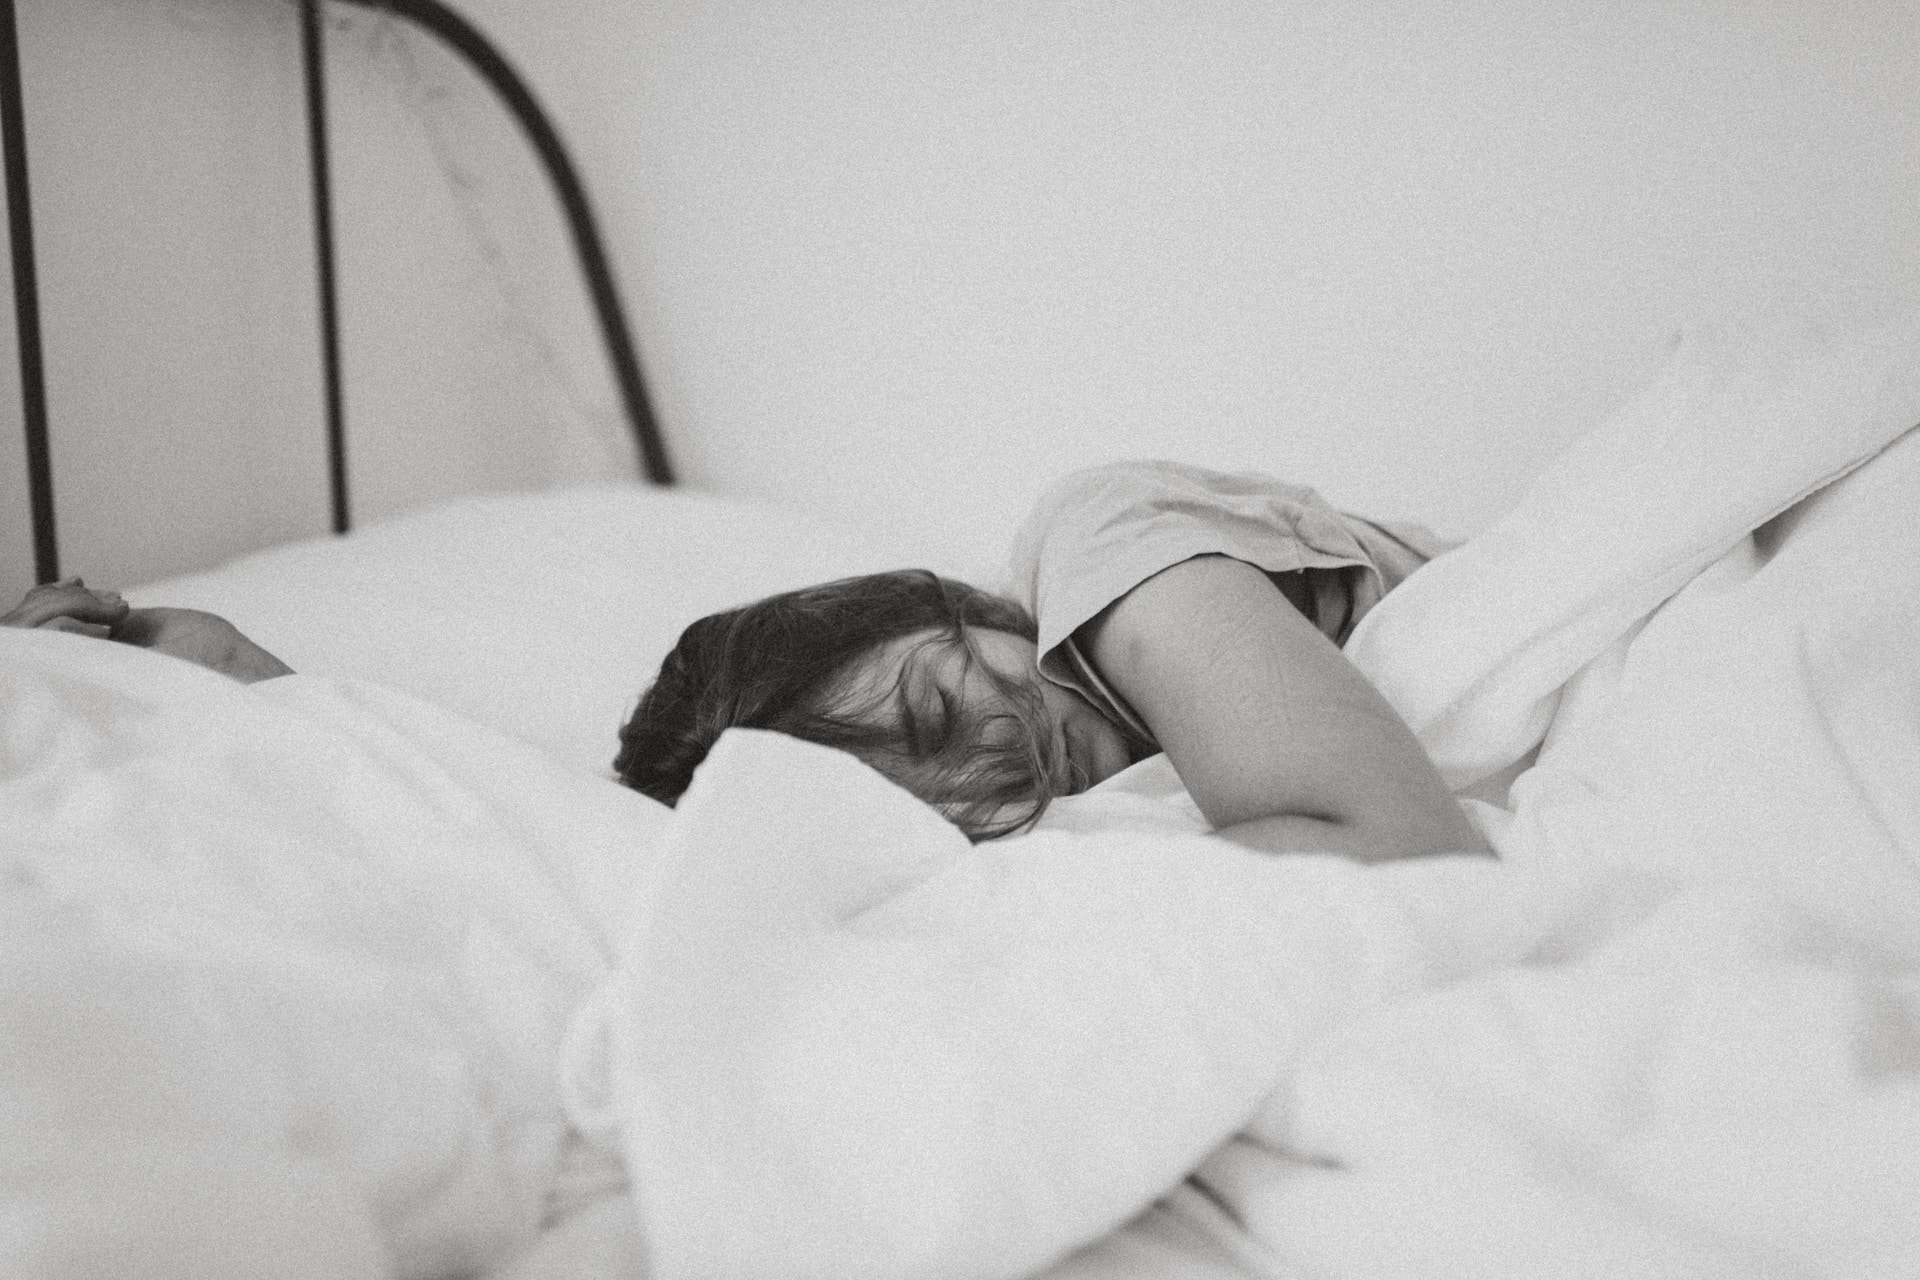 Penelitian Baru: Tidur Hanya 5 Jam Semalam dapat Jadi Penyebab Kematian Dini, Singkirkan Gadget di Ranjang!